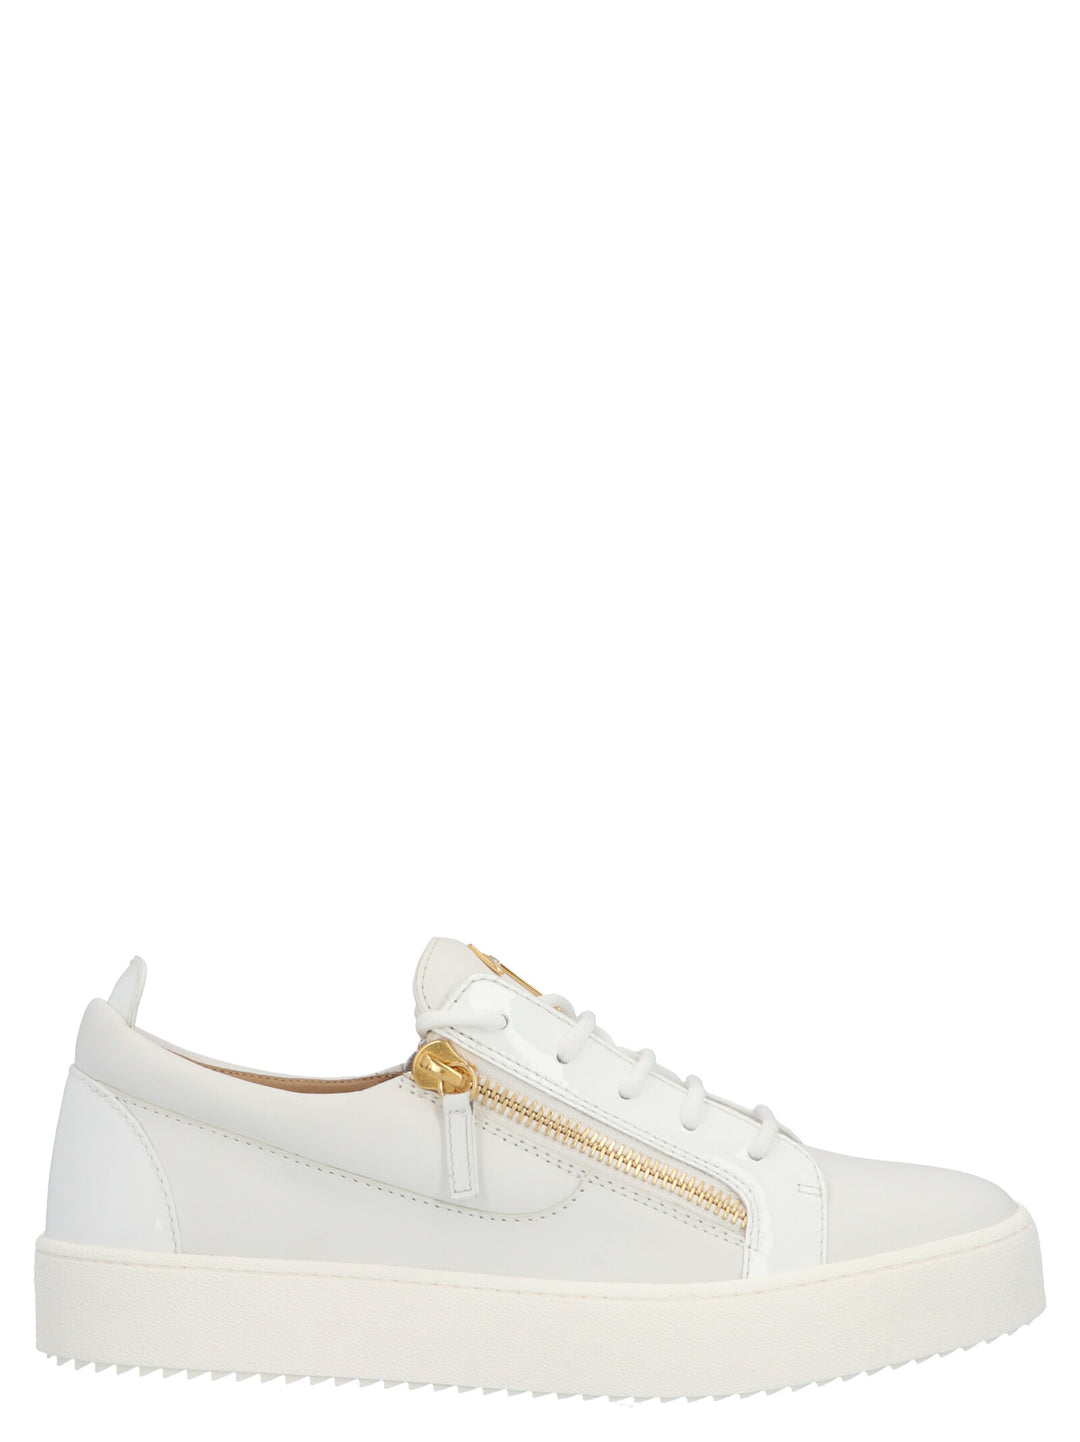 'May London’ Sneakers Bianco